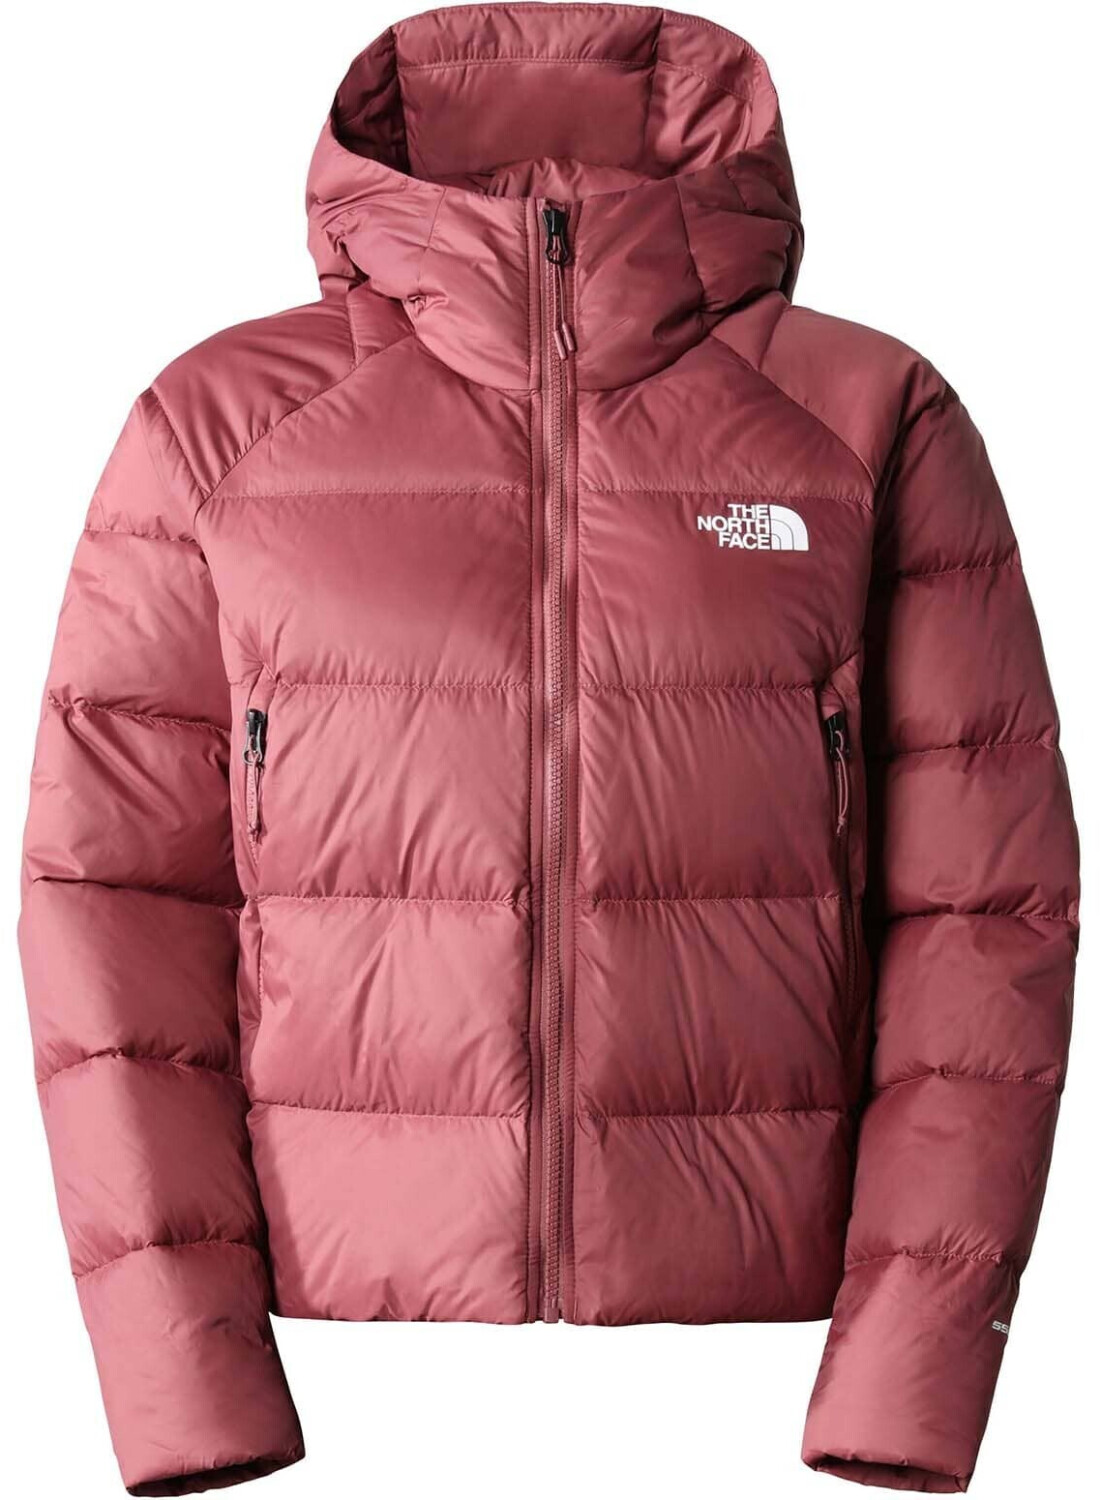 The North Face Women\'s Hyalite Down Hooded Jacket wild ginger ab 237,23 € |  Preisvergleich bei